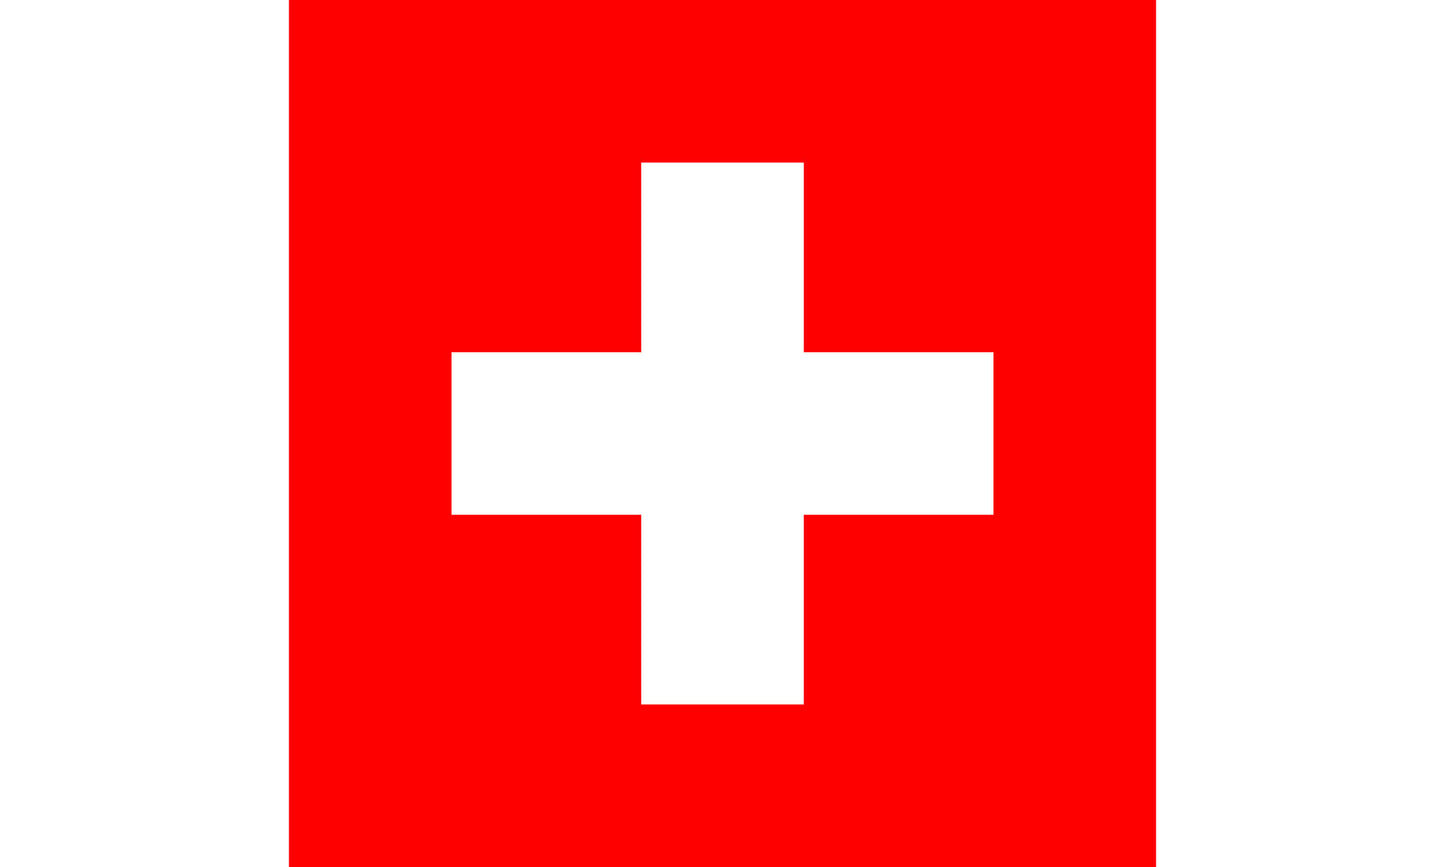 UF-SWS-150x90 - государственный флаг Швейцарии. Материал флага: полиэстер с бронзовыми кольцами, размер: 90 см х 150 см